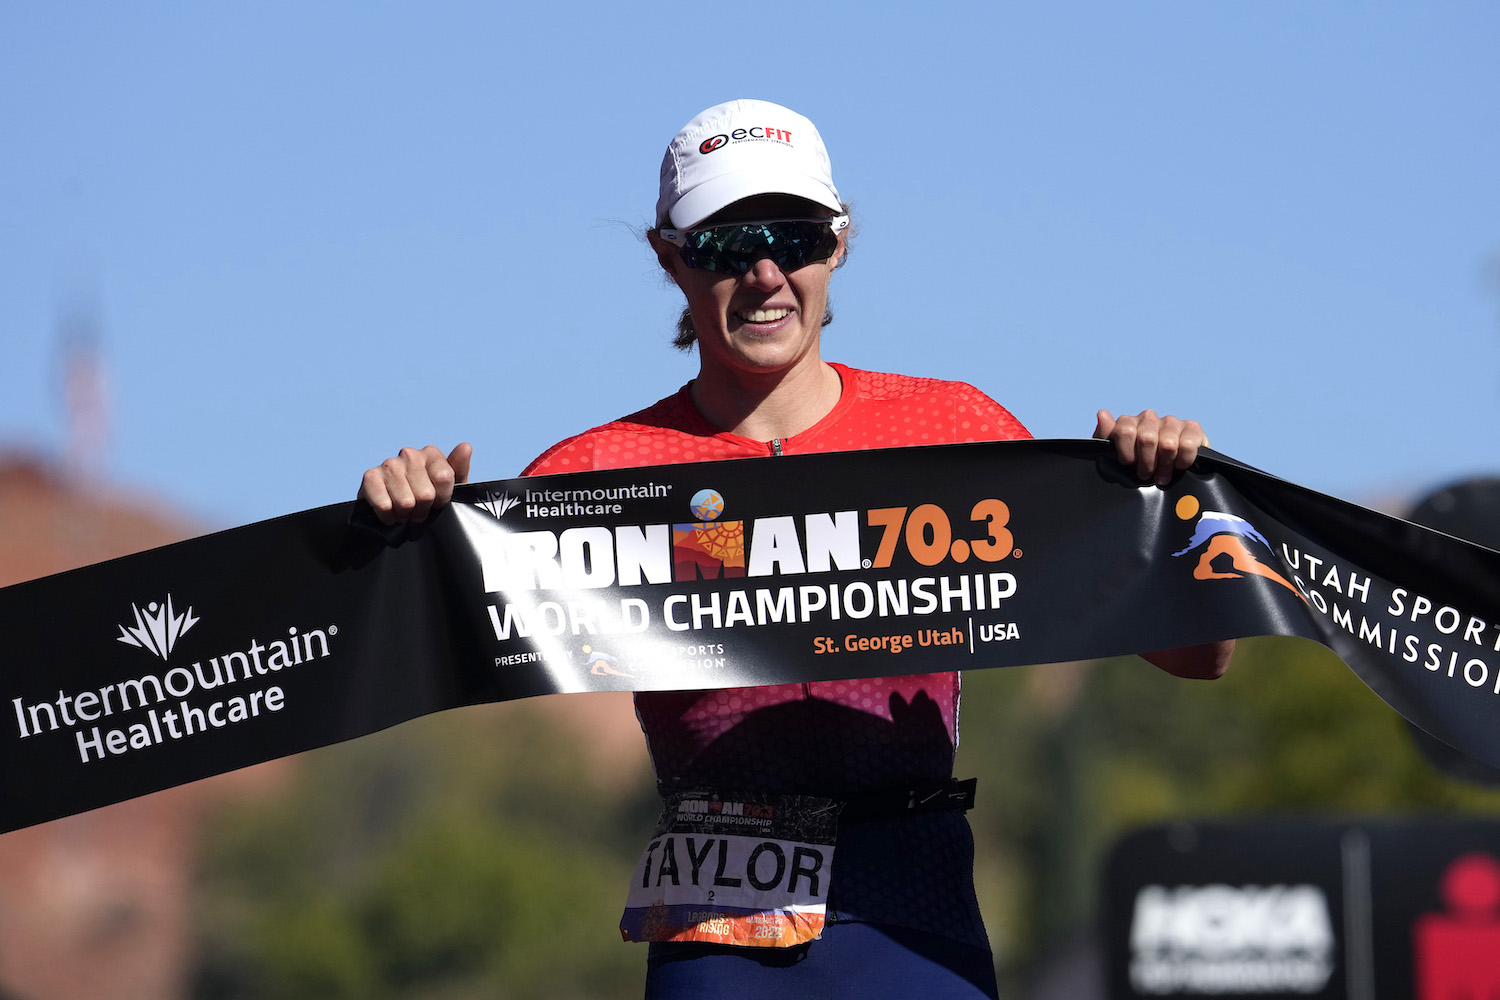 Taylor Knibb wins the Ironman 70.3 World Championship